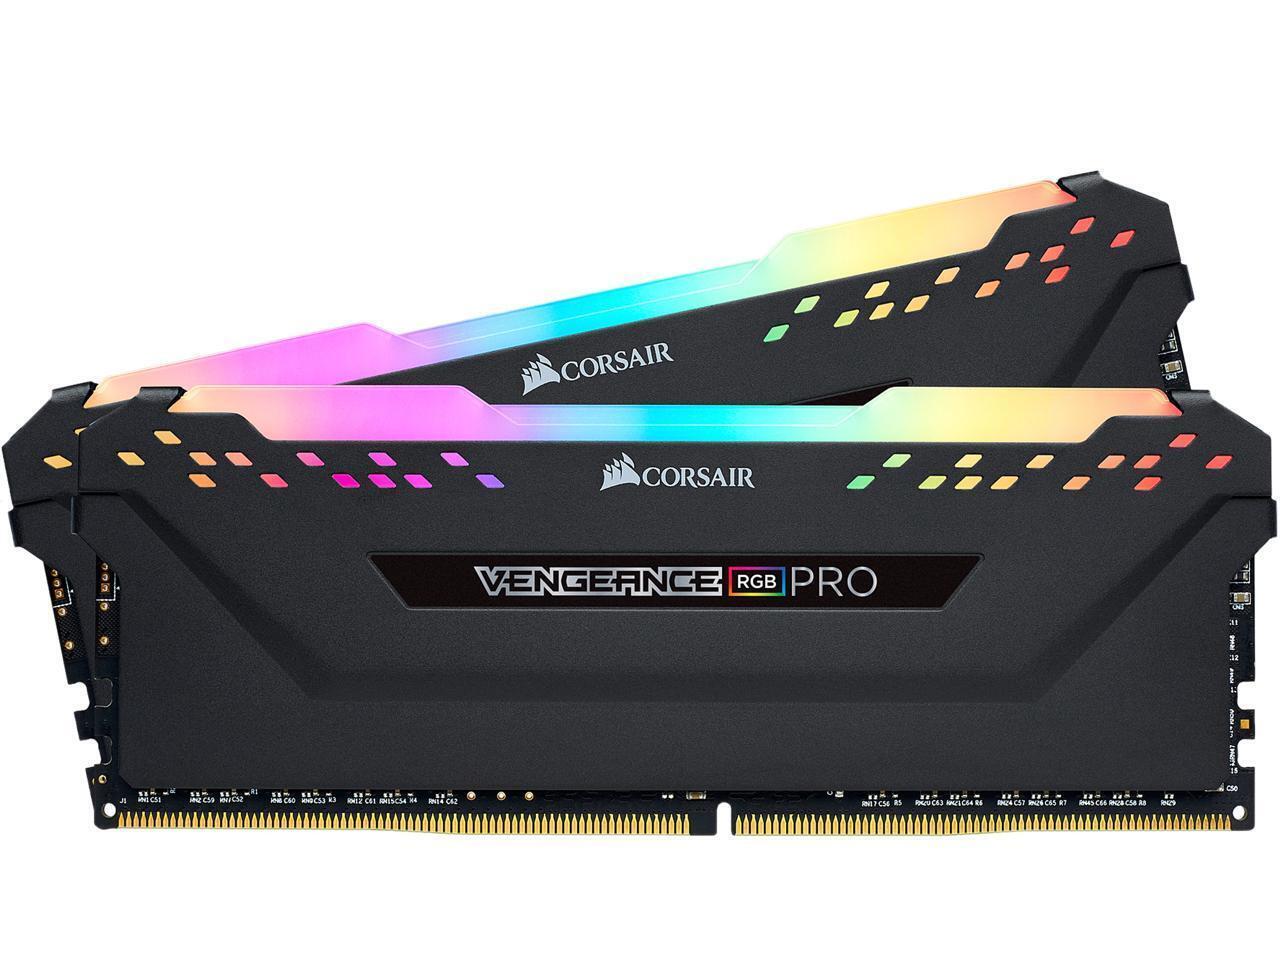 CORSAIR Vengeance RGB Pro 16GB (2x8GB) DDR4 3200 (PC4 25600) Desktop Memory BK